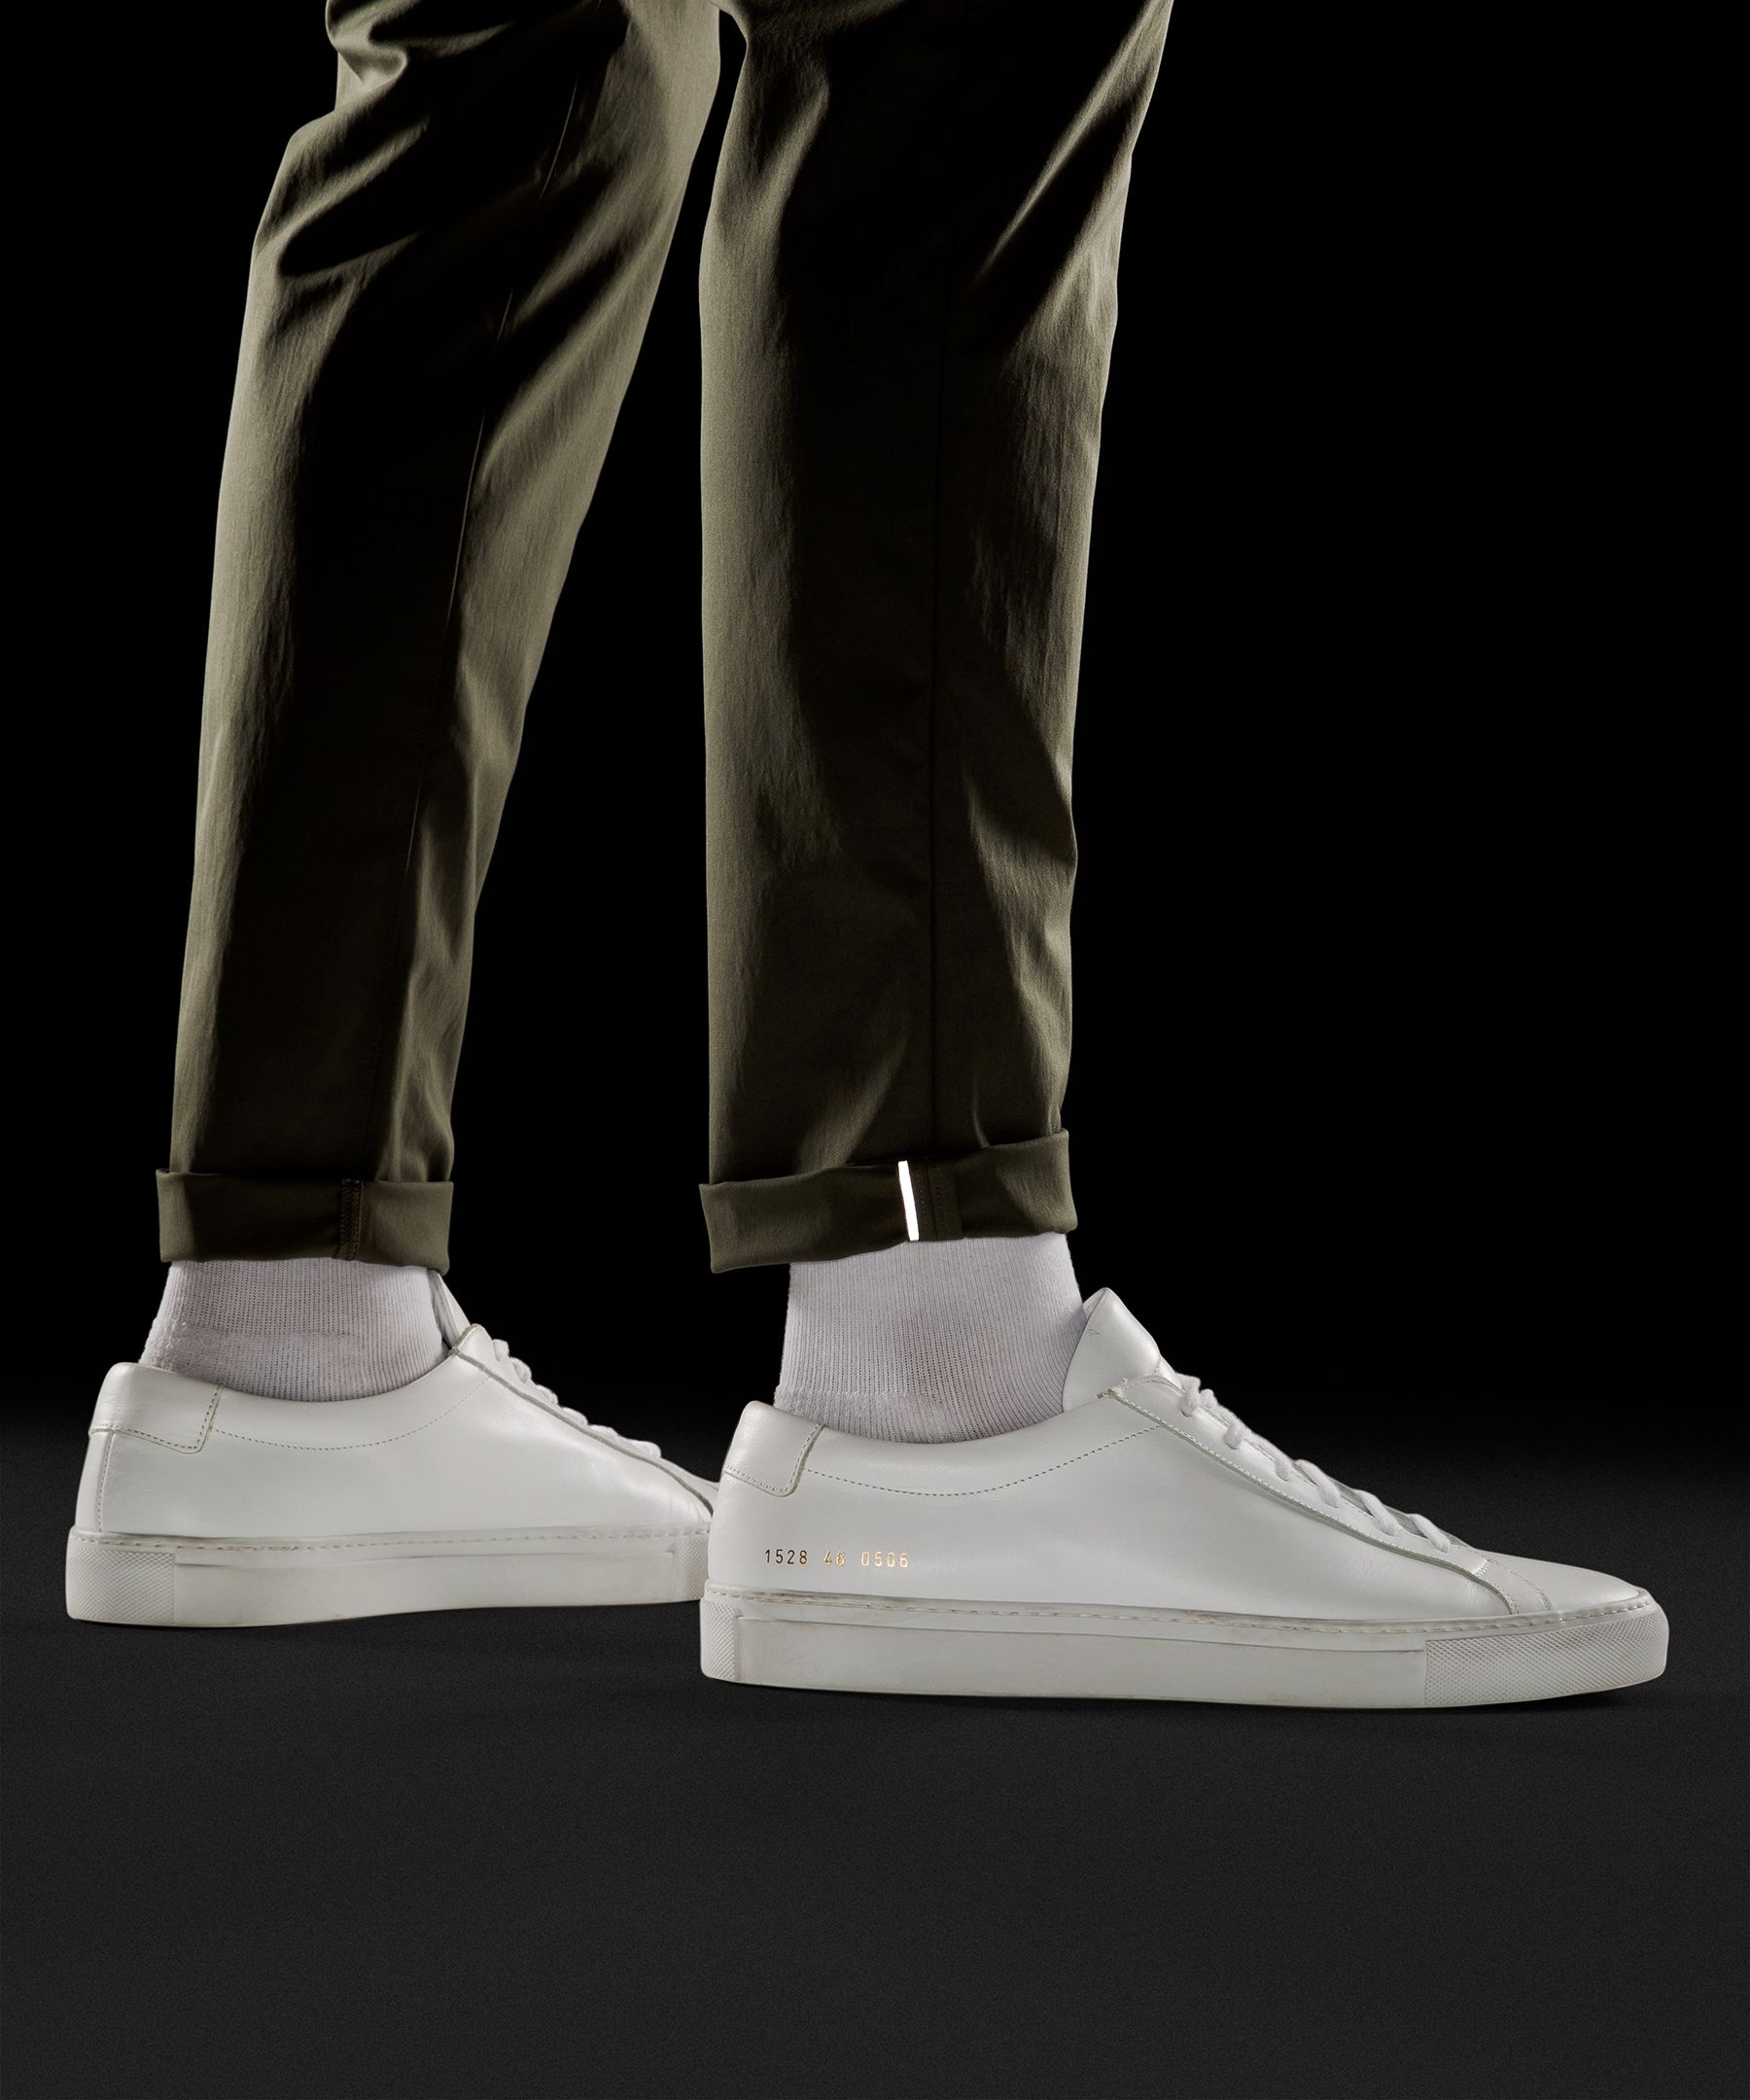 ABC Slim-Fit Trouser 32L *Stretch Cotton VersaTwill